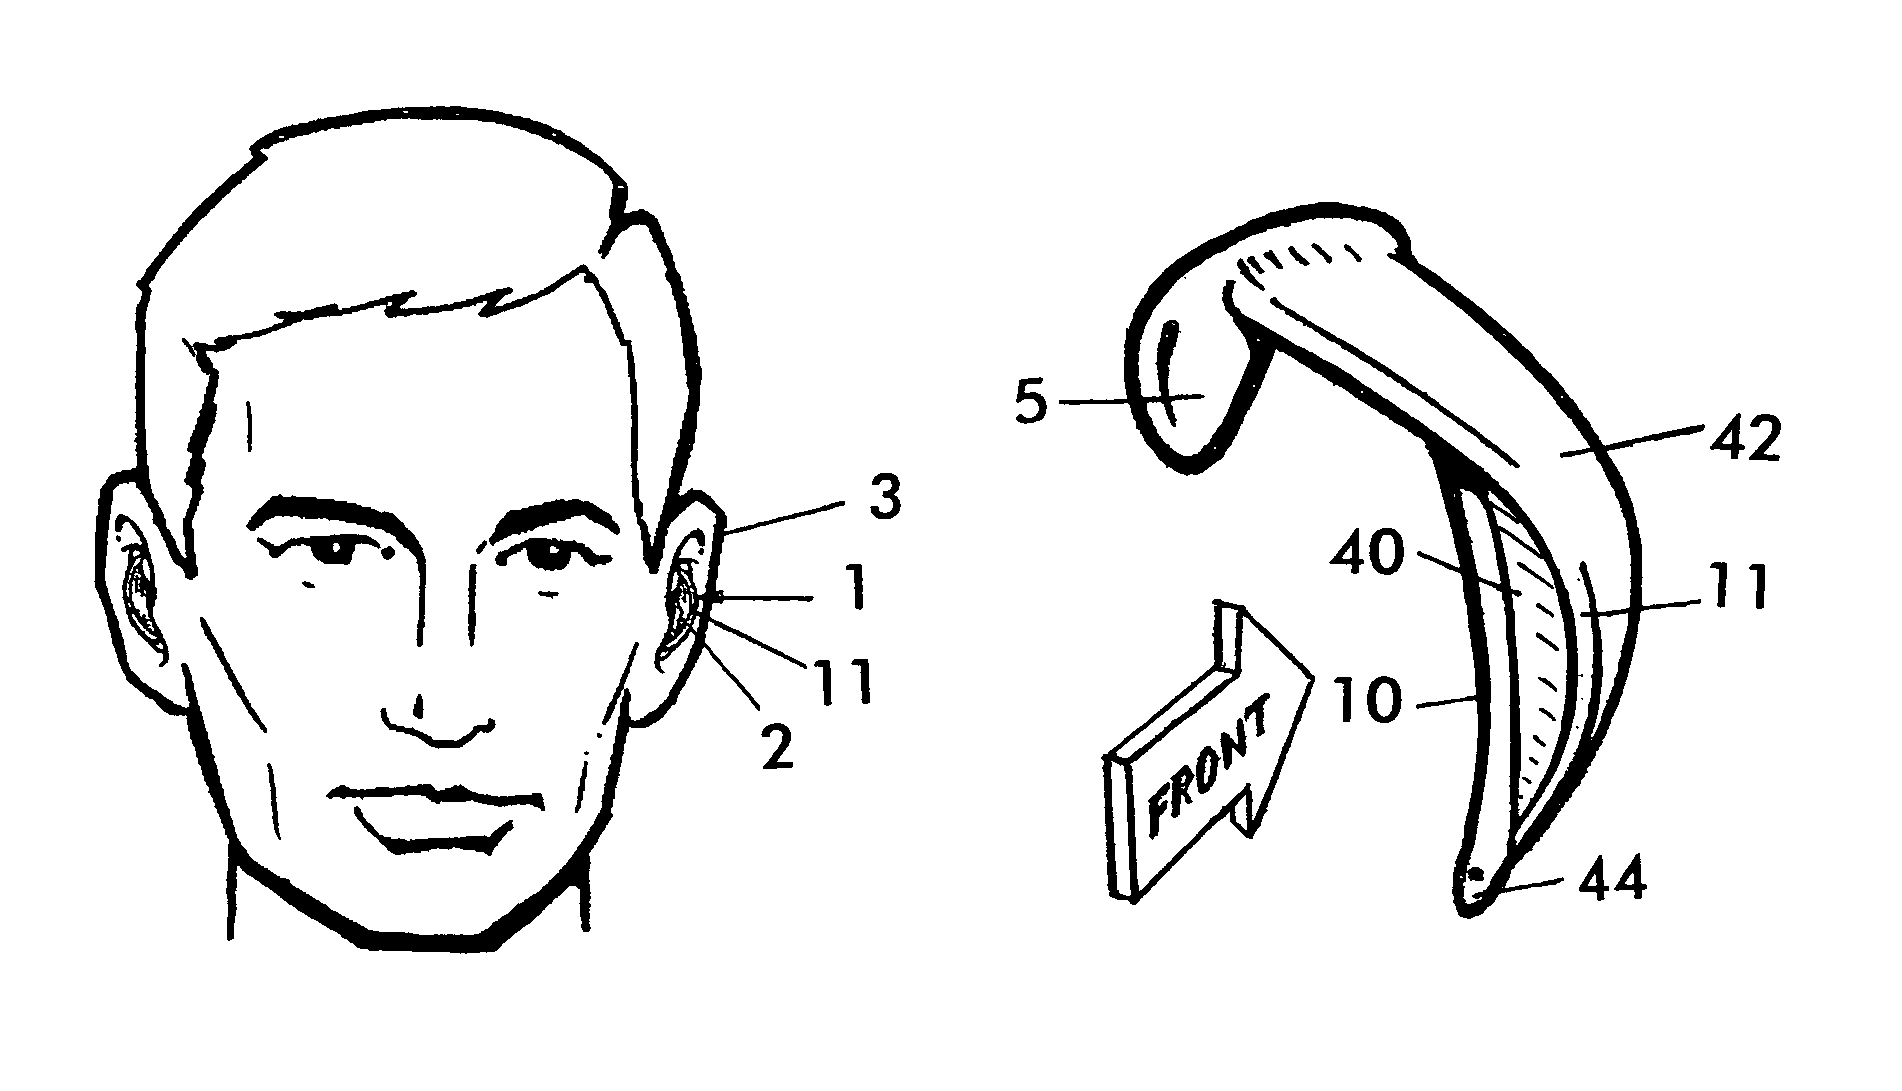 External ear insert for hearing comprehension enhancement